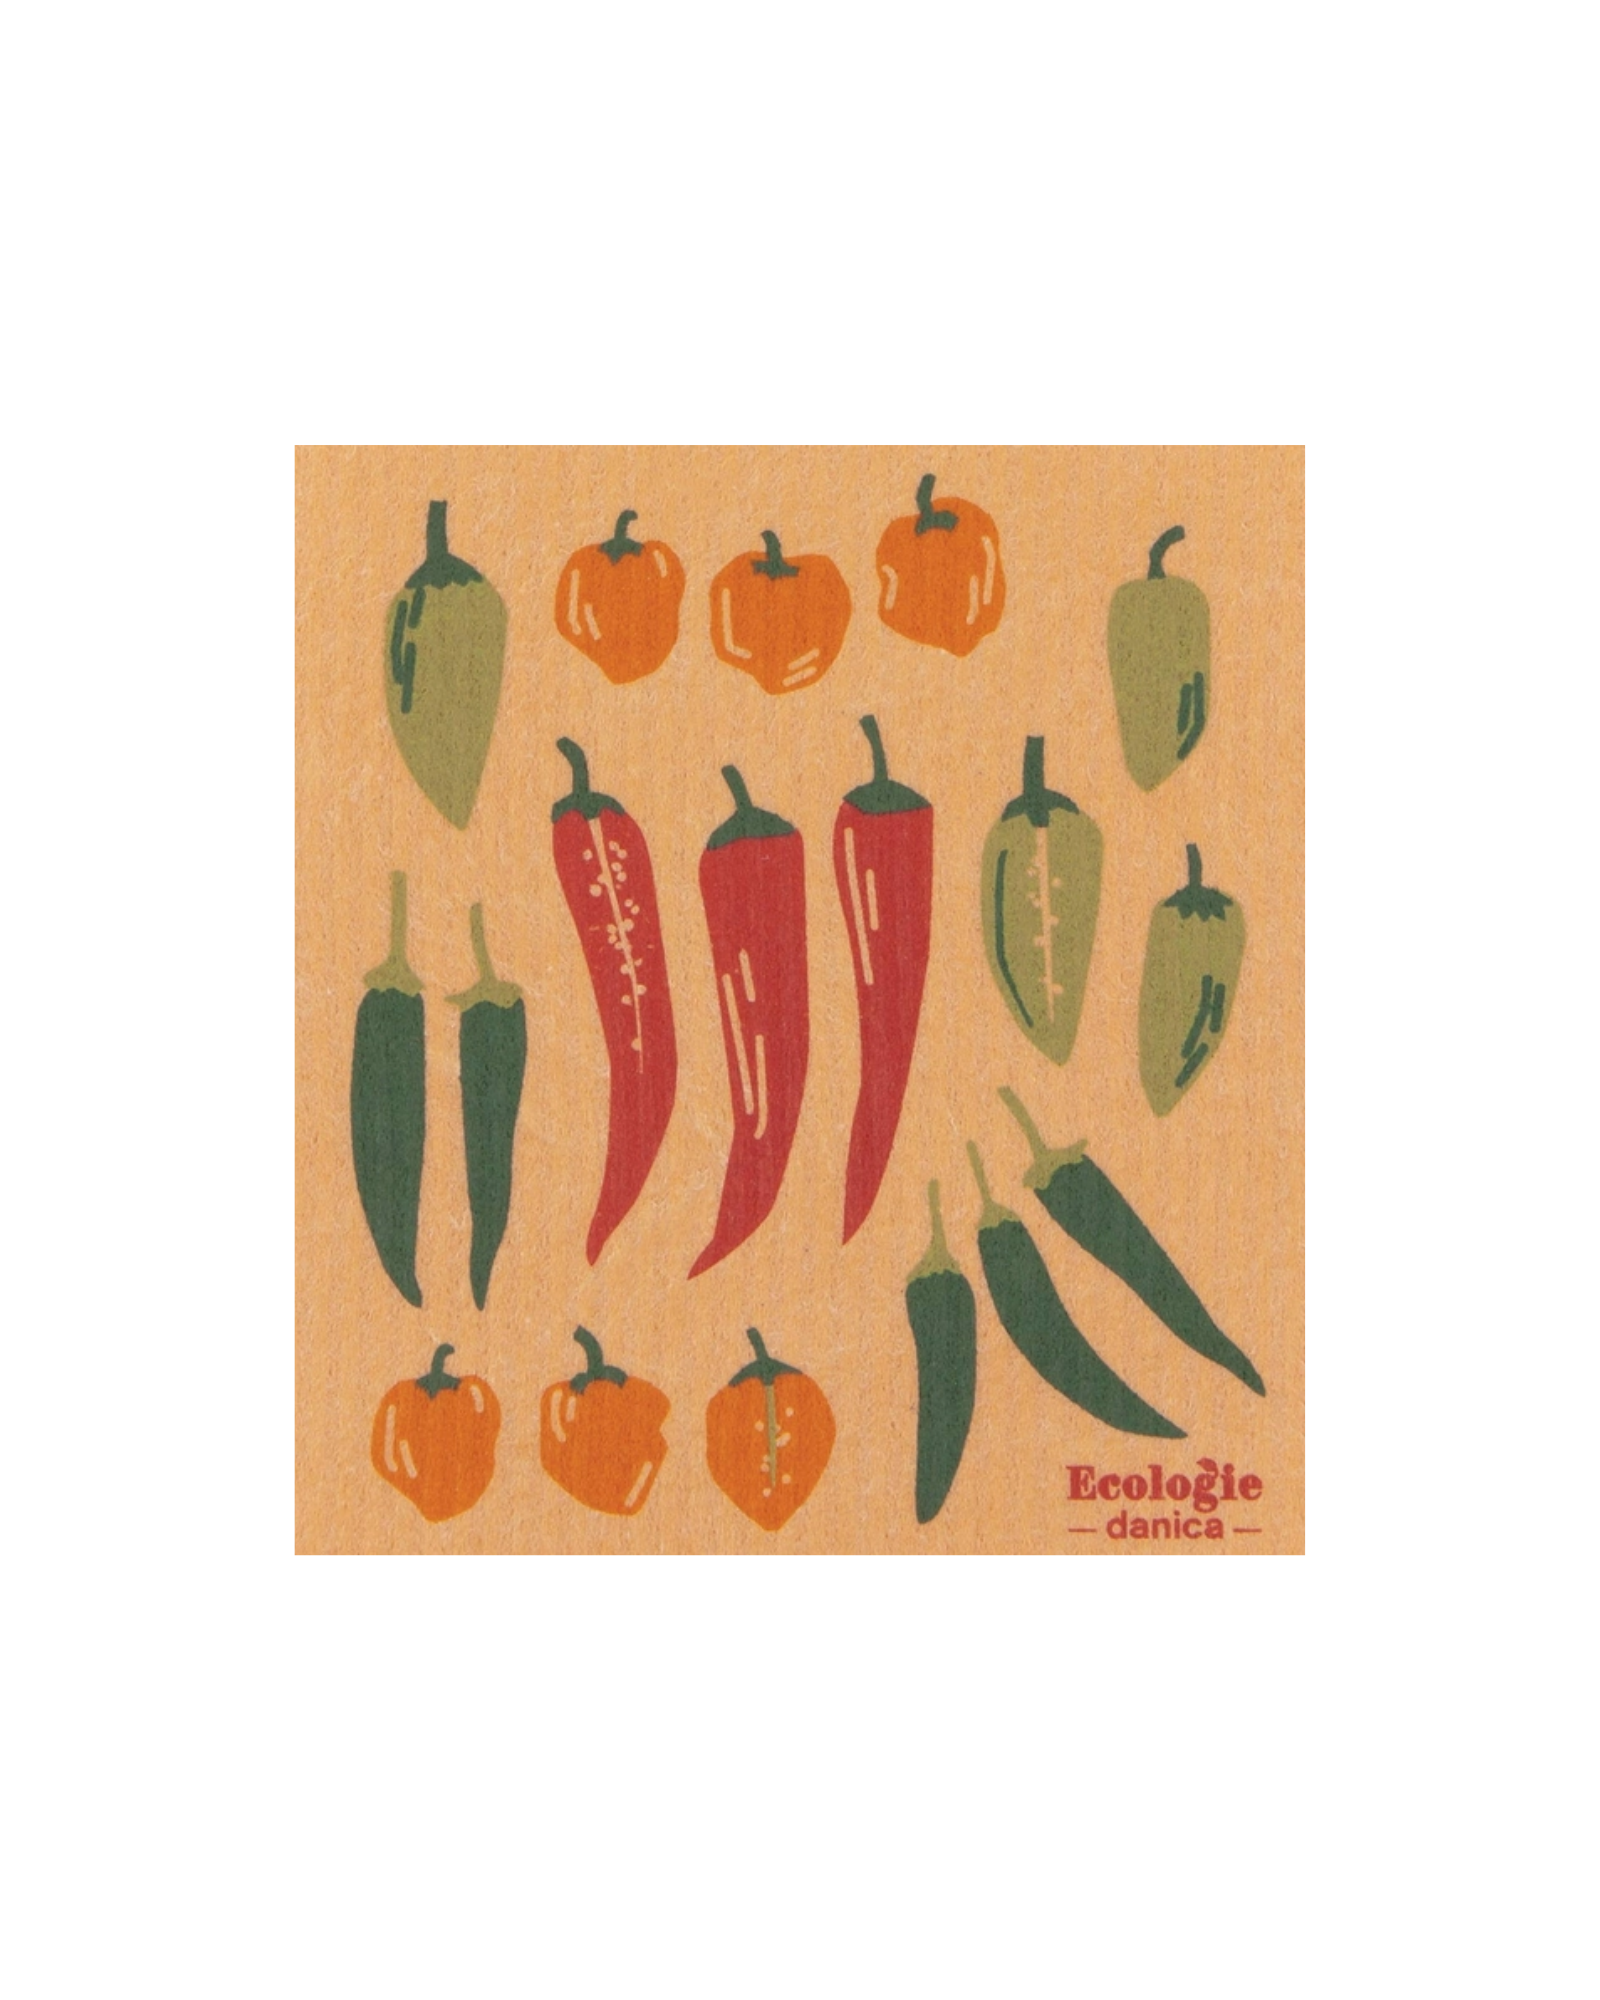 Square orange swedish dishcloth with chili pepper illustrations